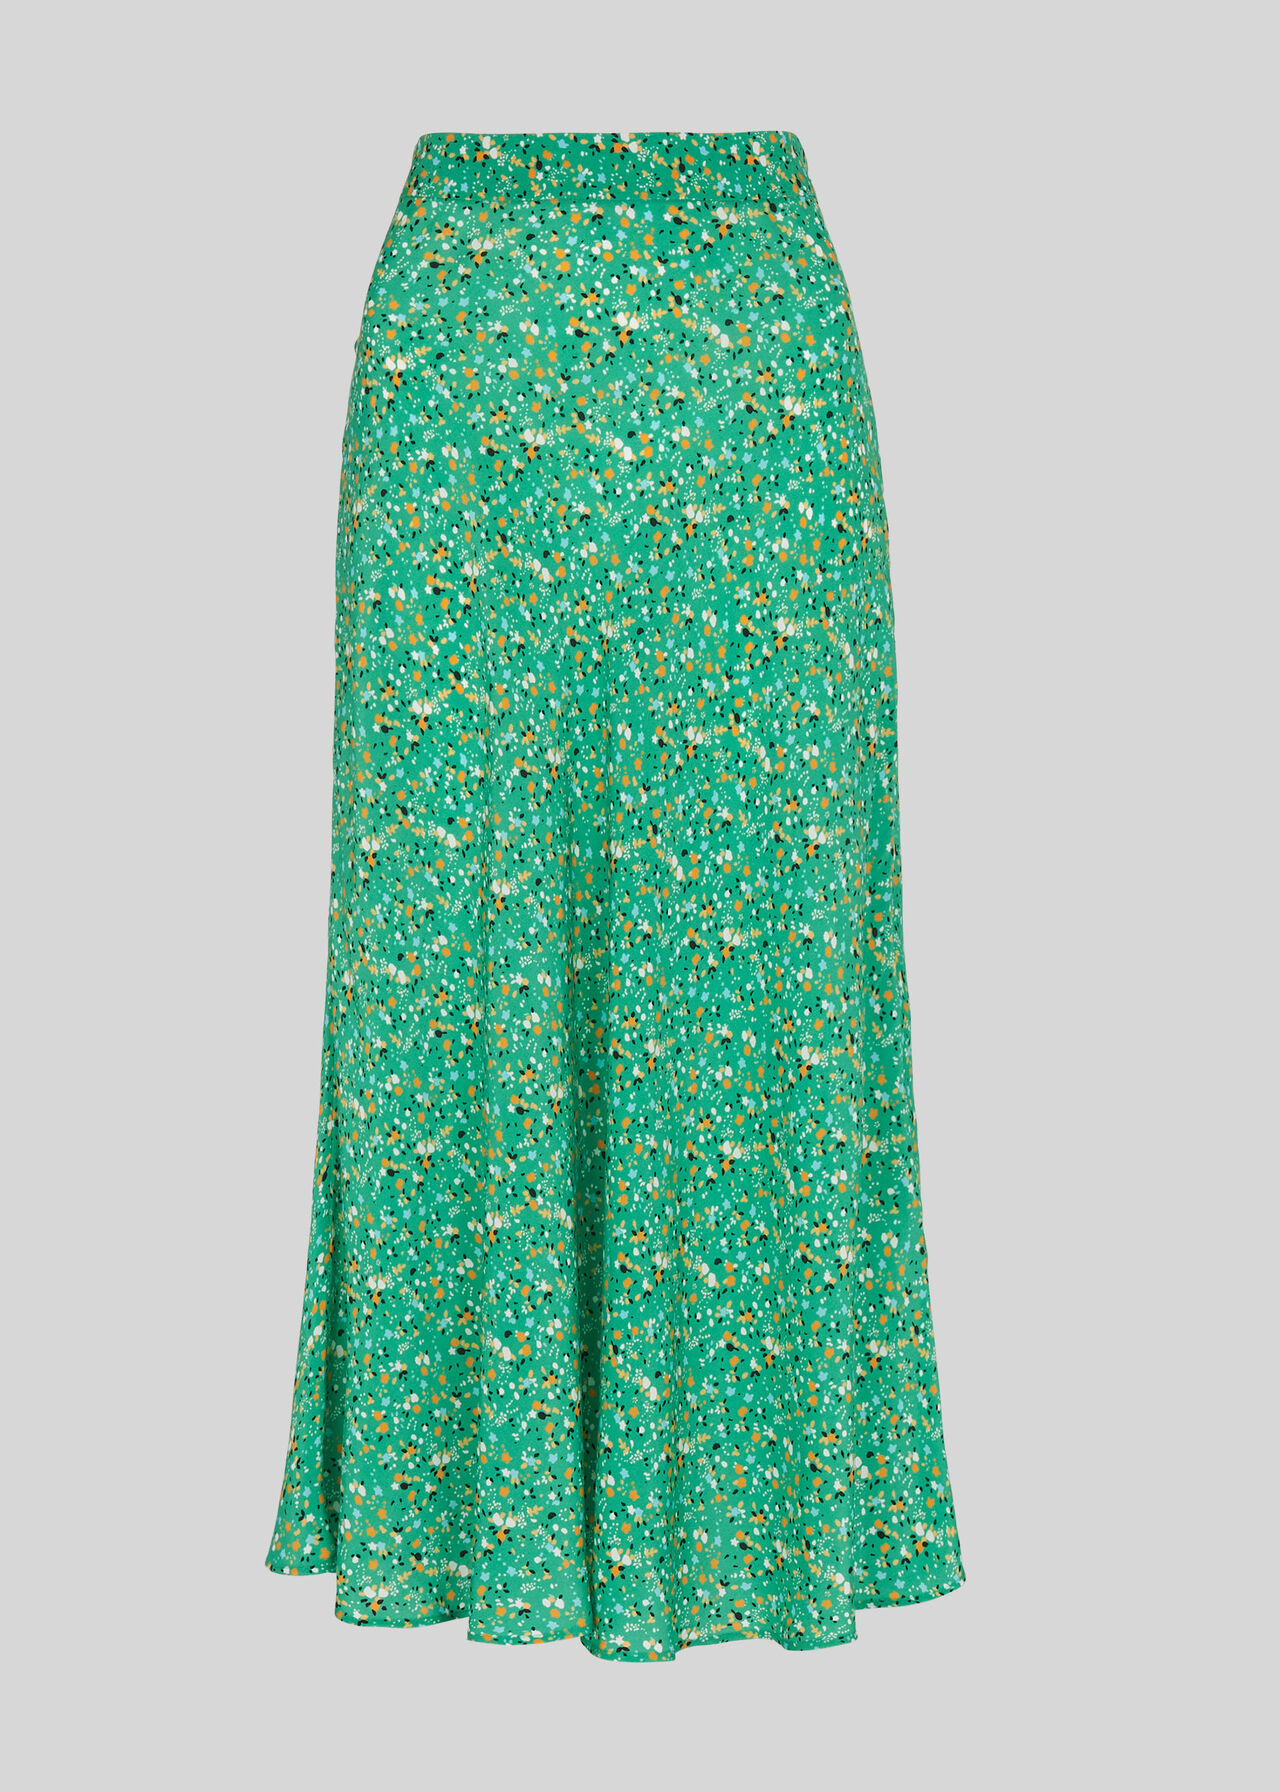 Green/Multi Ditsy Blossom Bias Cut Skirt | WHISTLES